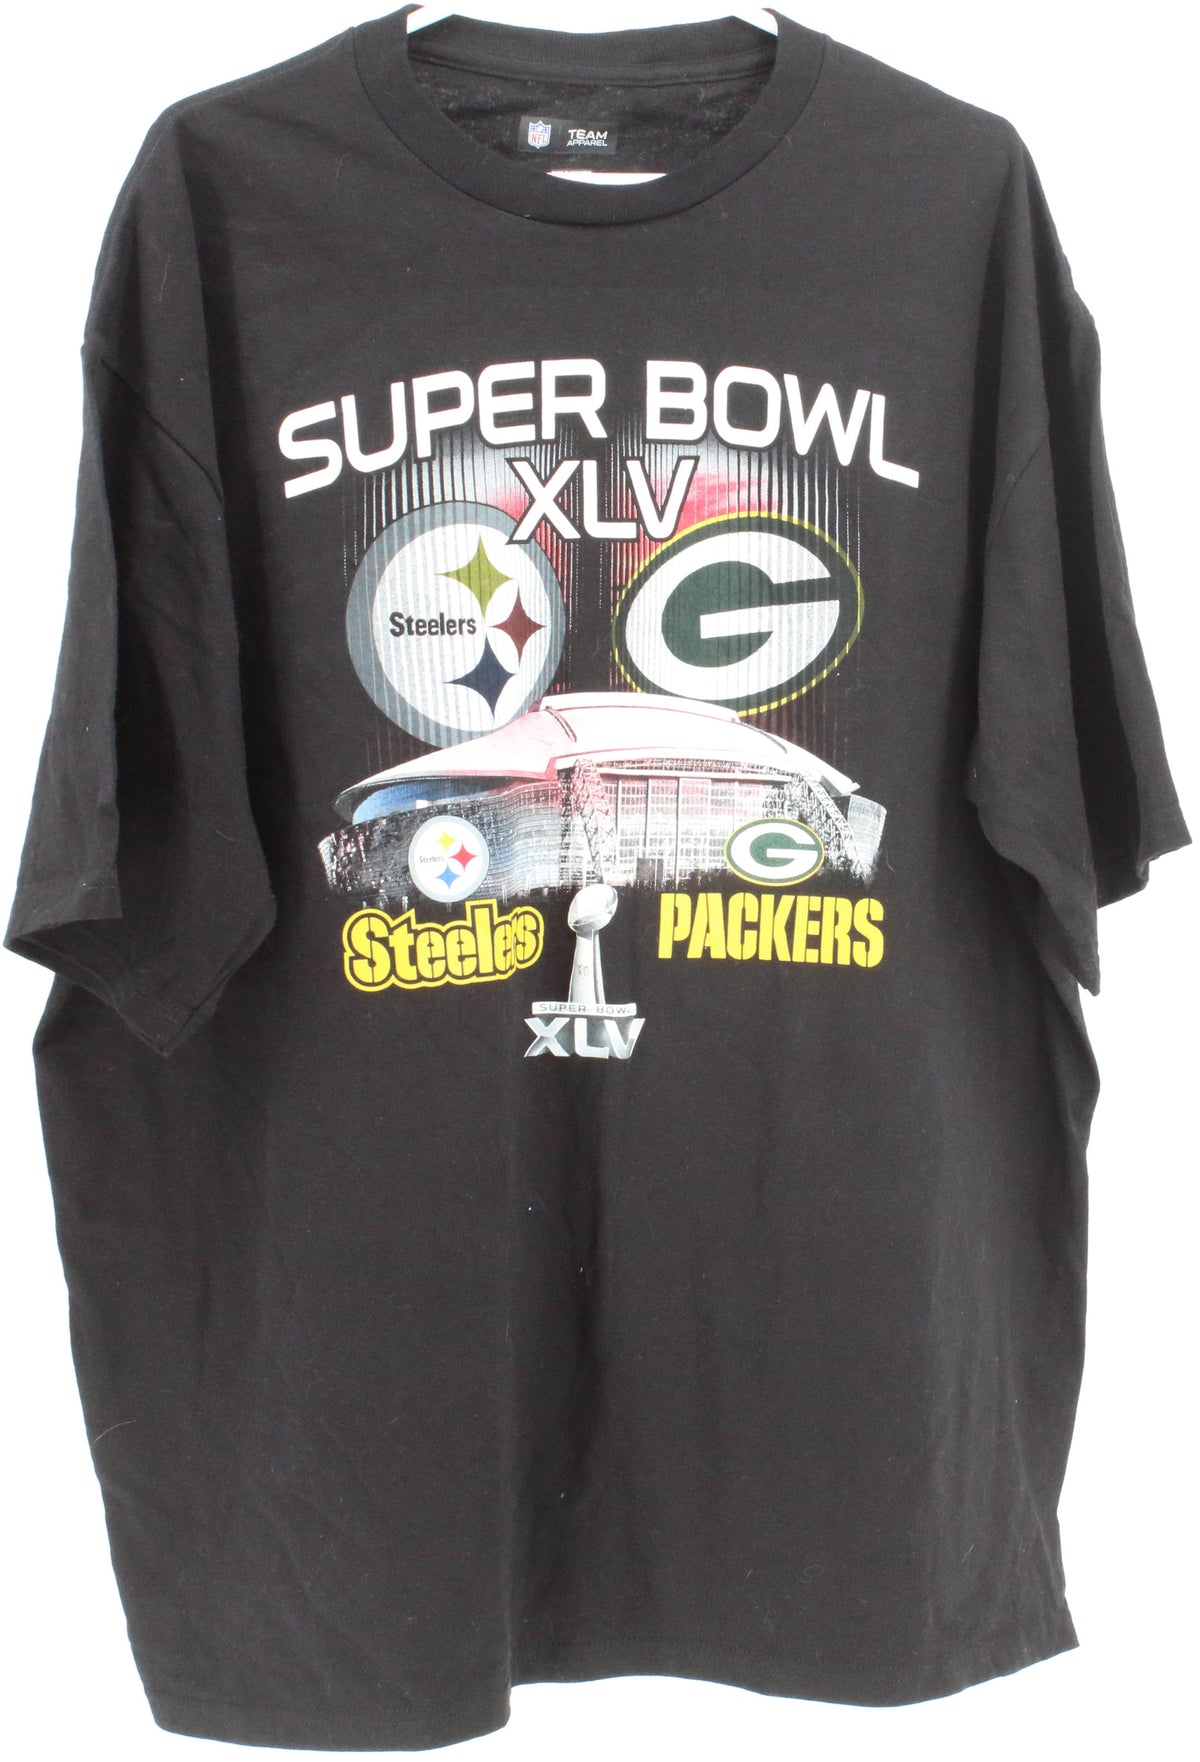 NFL Team Apparel Super Bowl XLV Steelers Green Packers Black T-Shirt